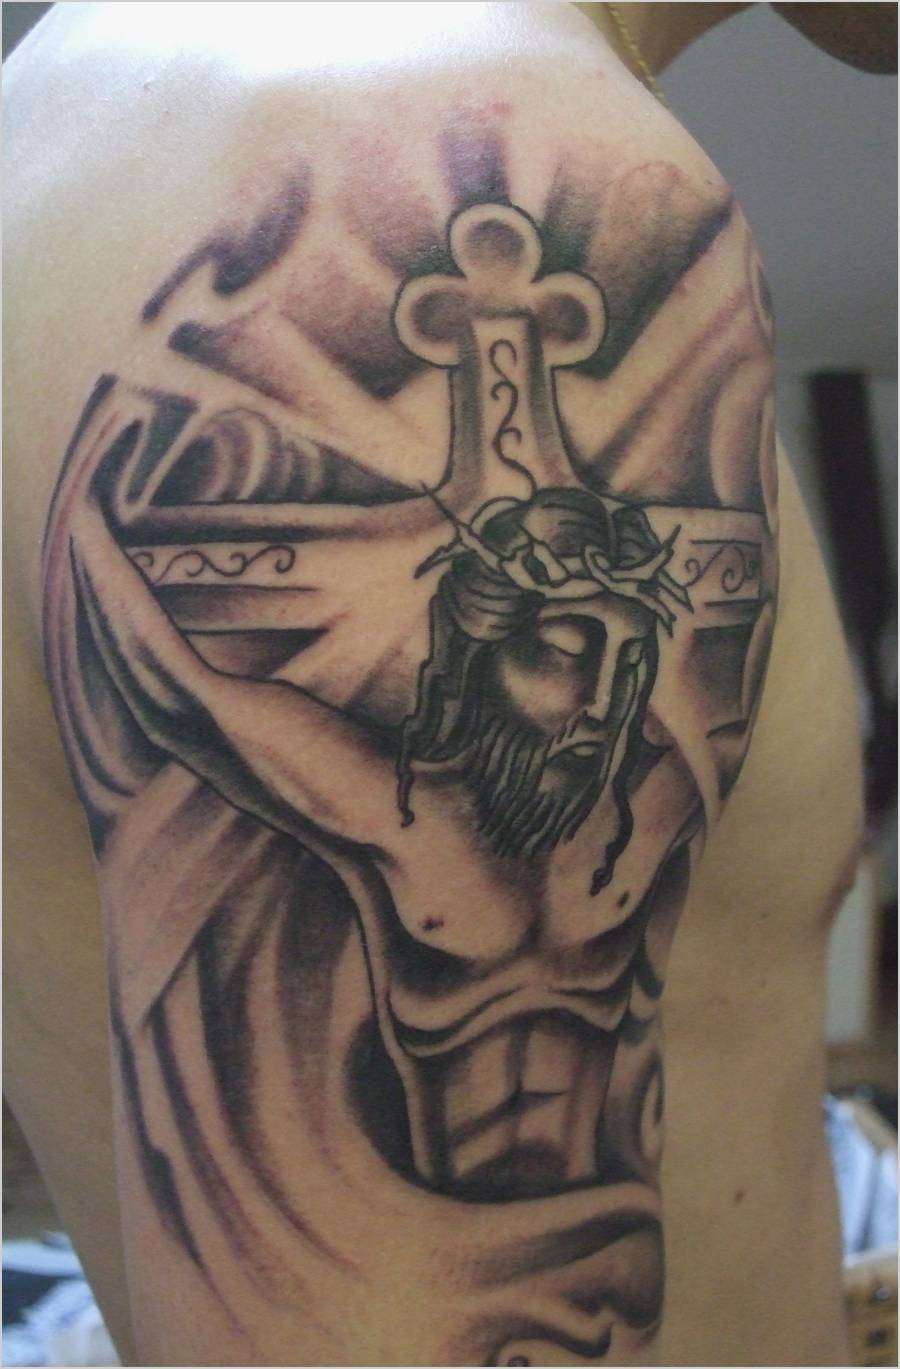 Jesus Tattoo Pictures 9001369 Christ Cross Tattoos Macyro pertaining to measurements 900 X 1369